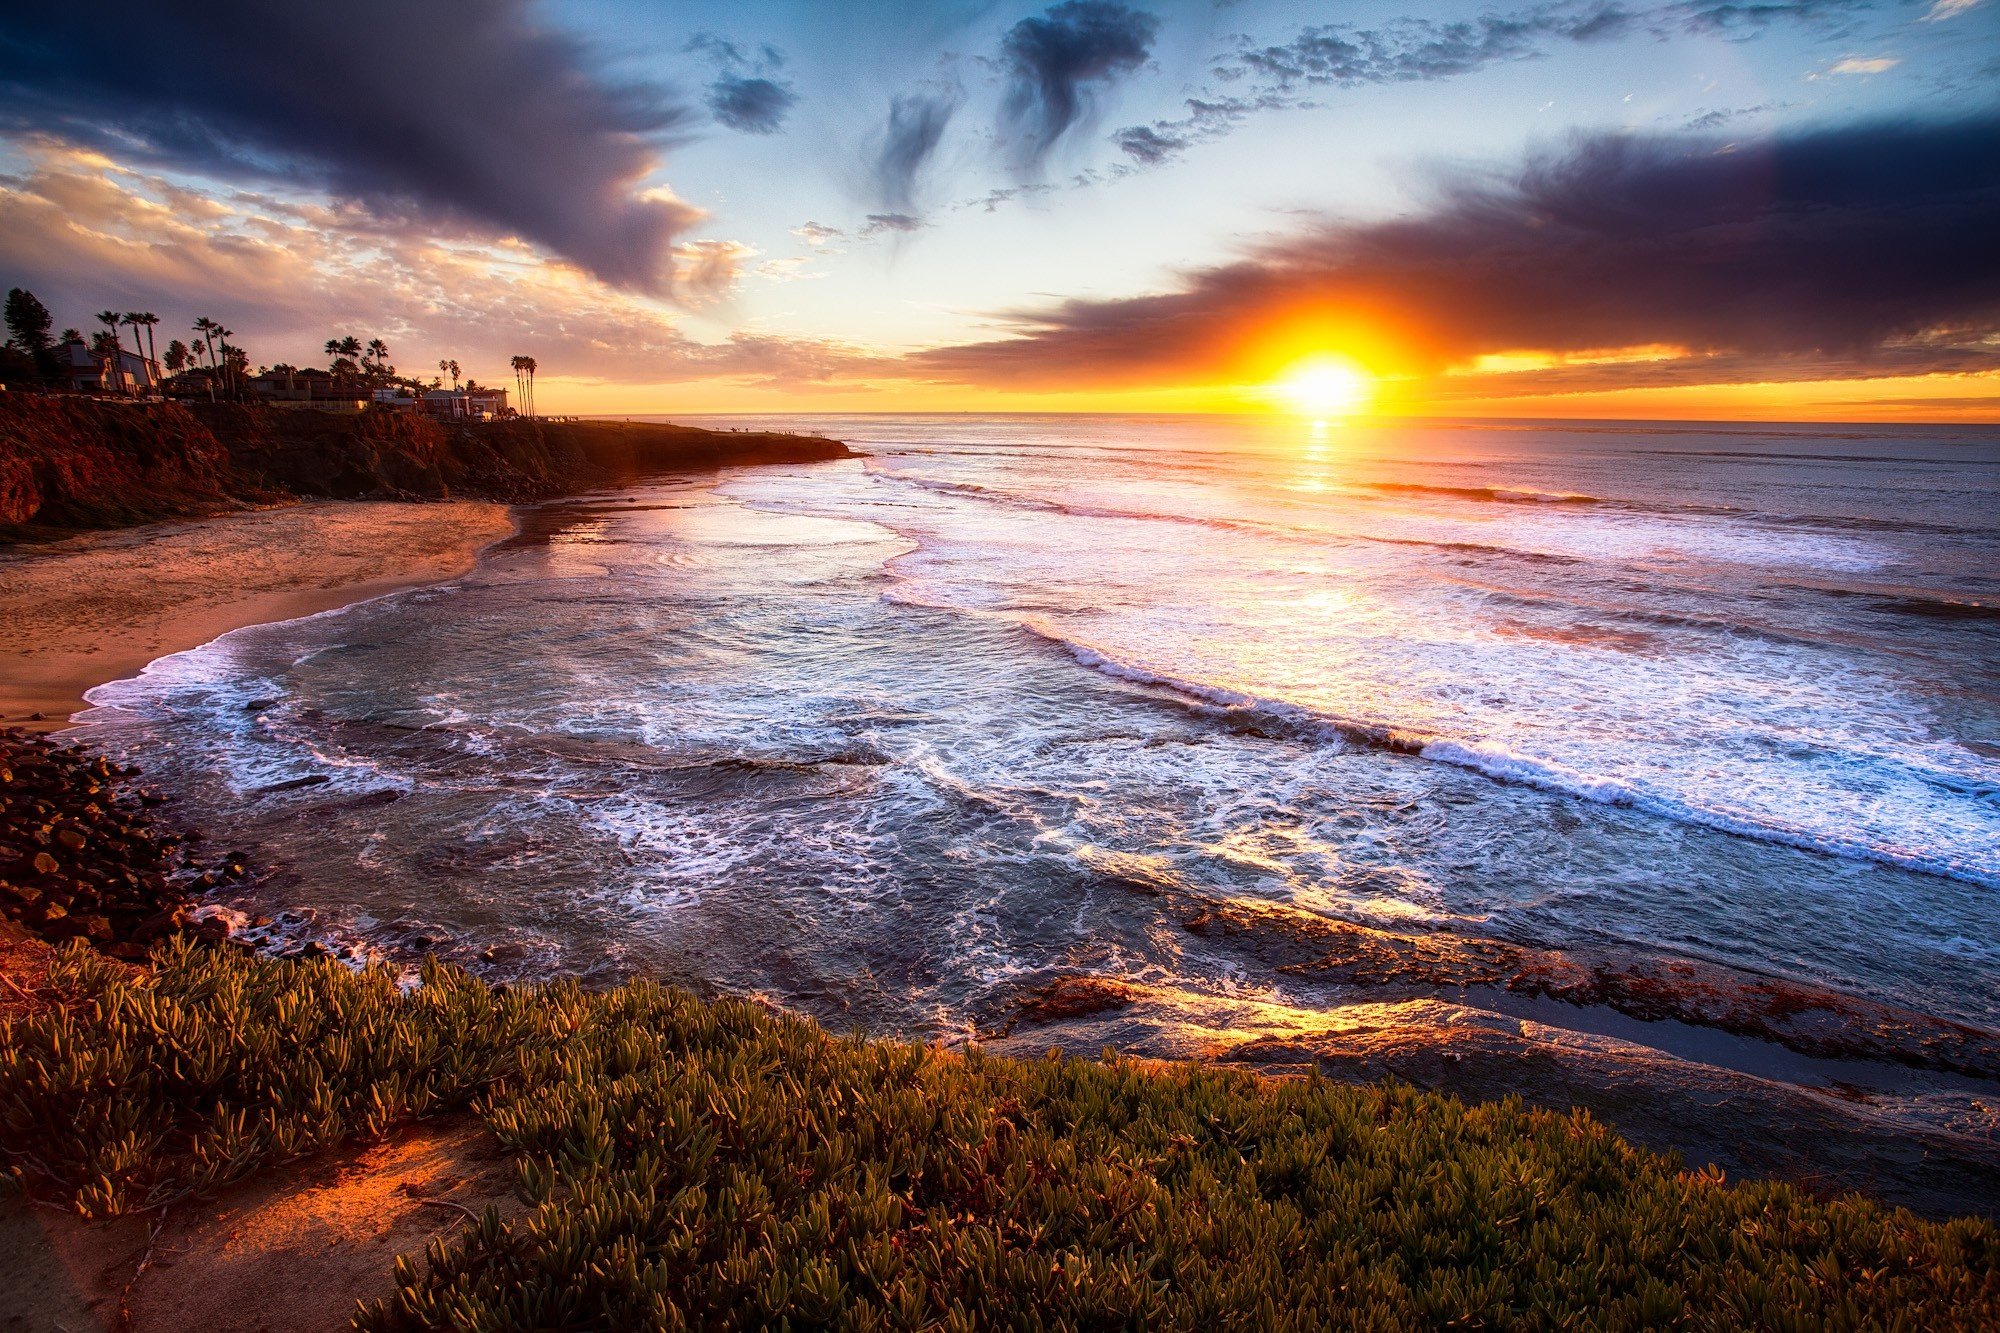 San Diego California sunset landscape wallpaper 2000x1333 291354